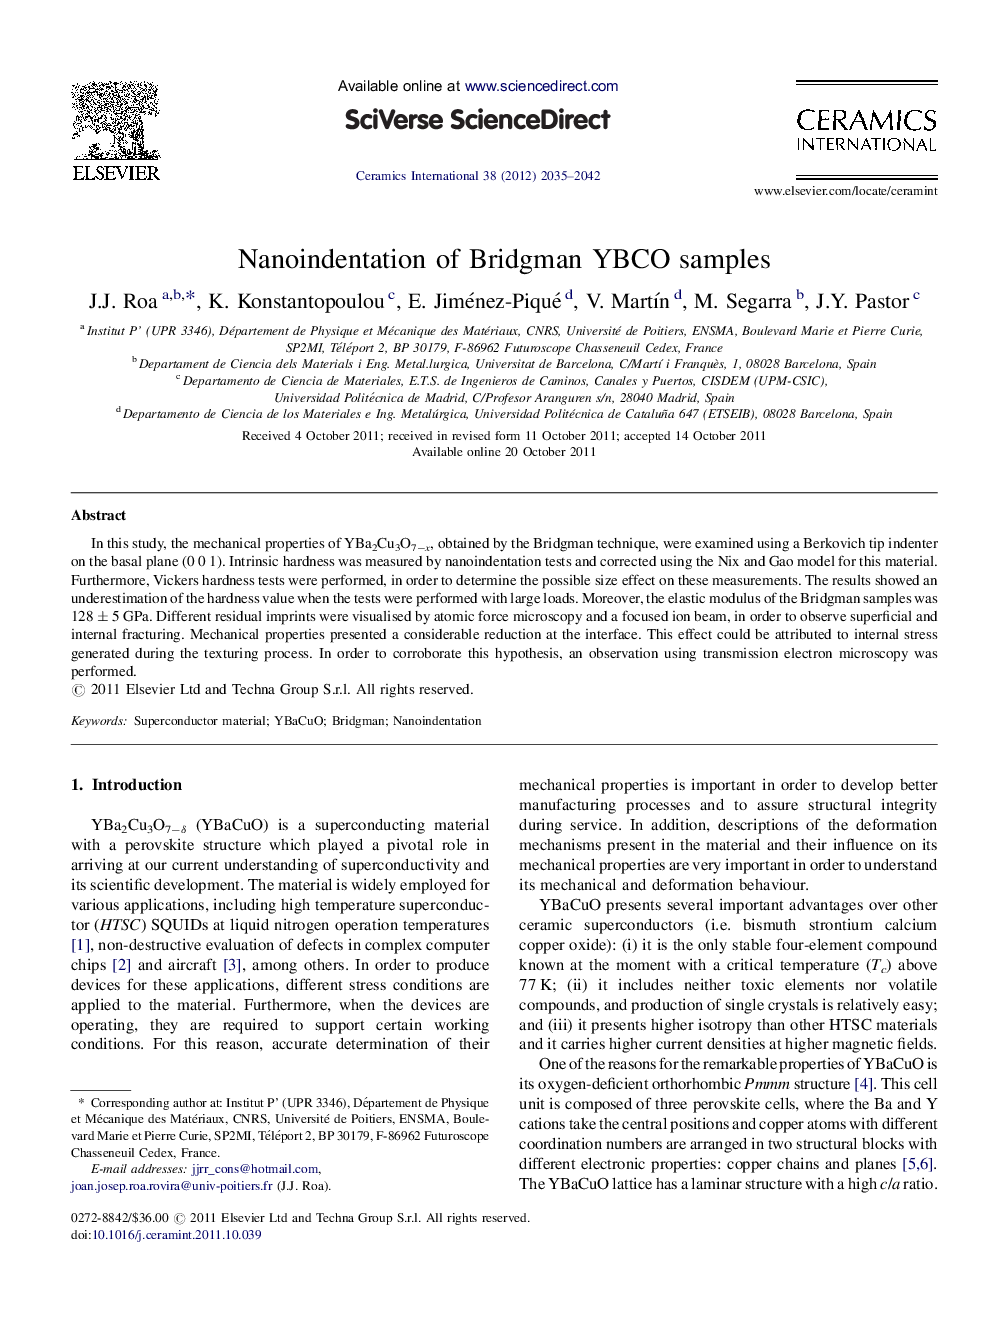 Nanoindentation of Bridgman YBCO samples